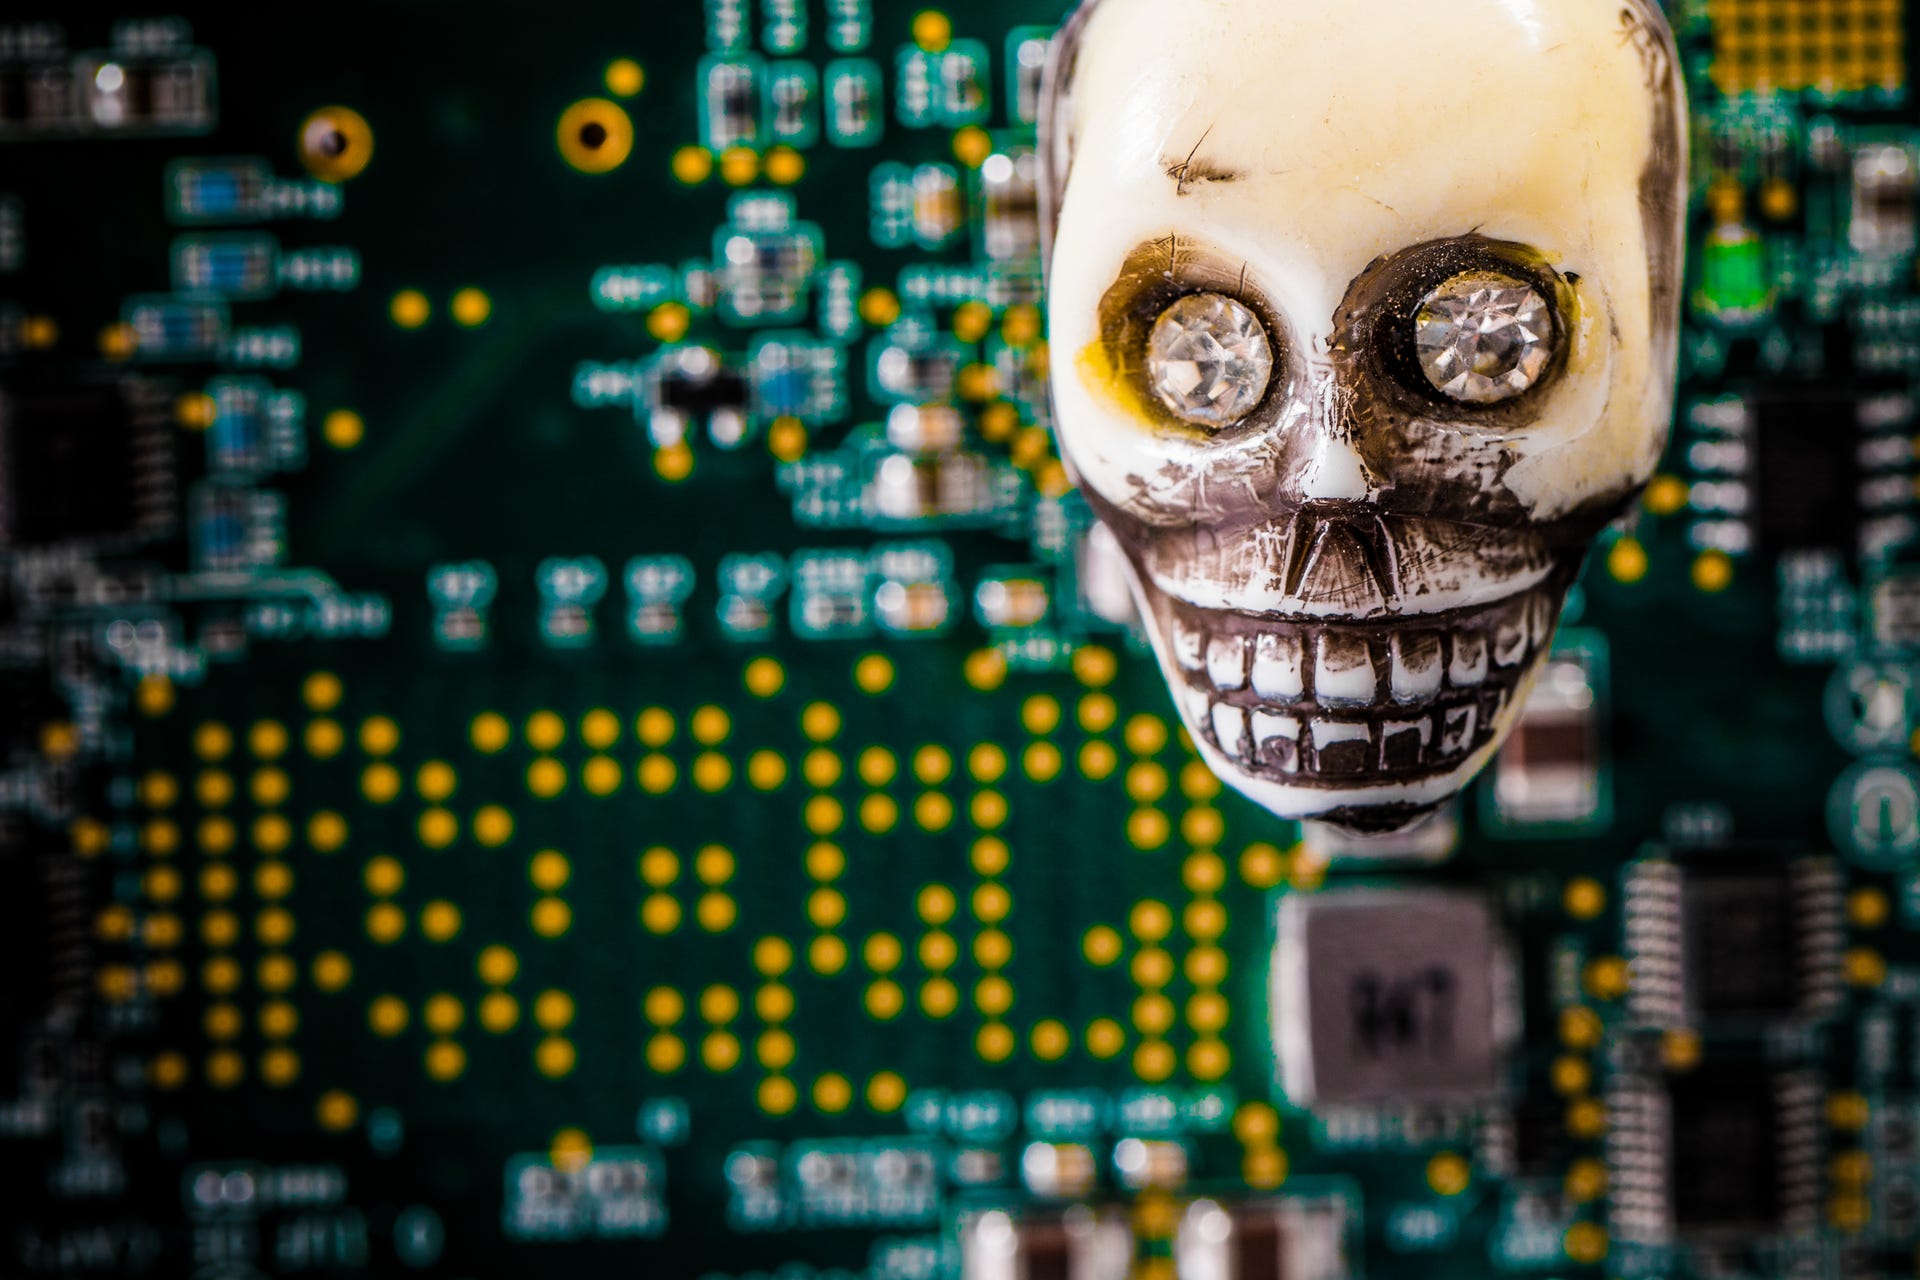 Skull and circuit board